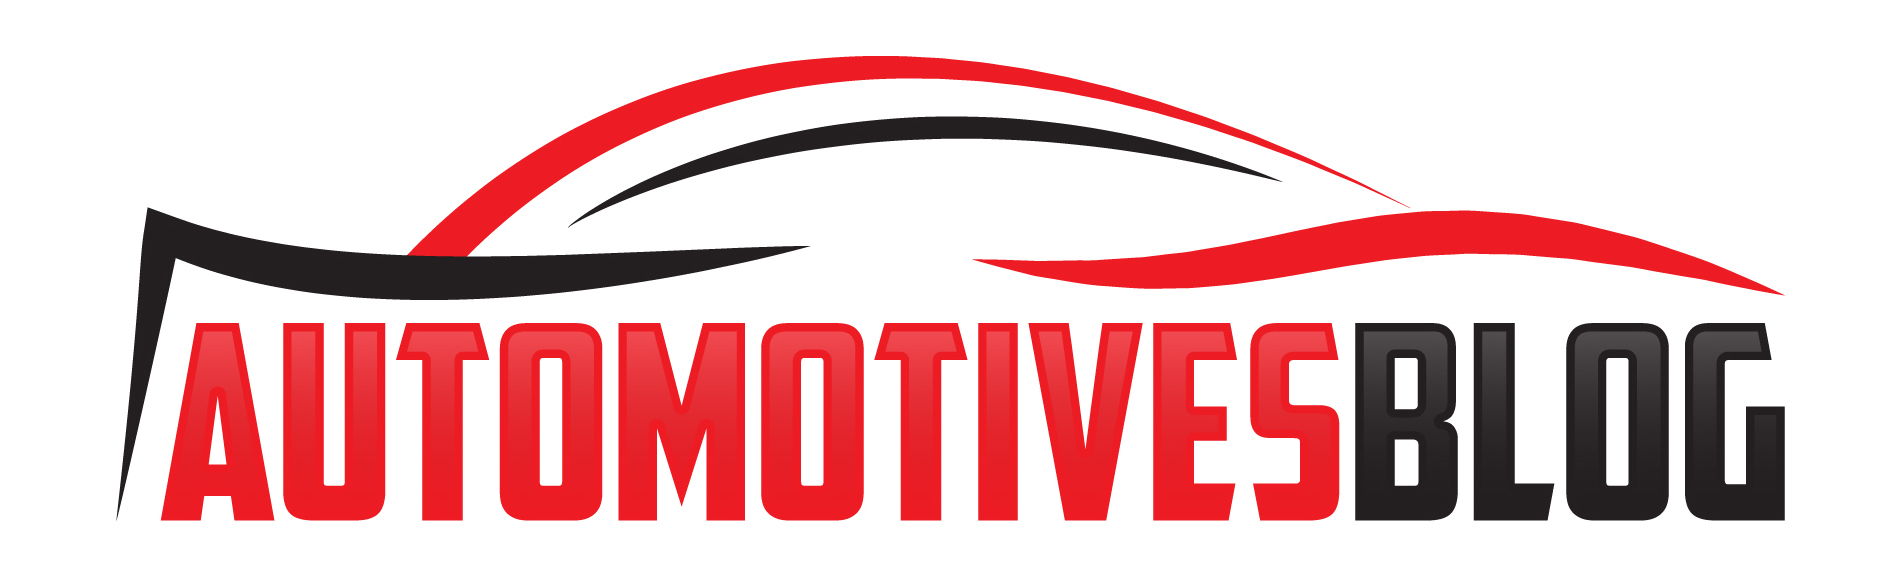 Automotivesblog - The Latest Automotive News